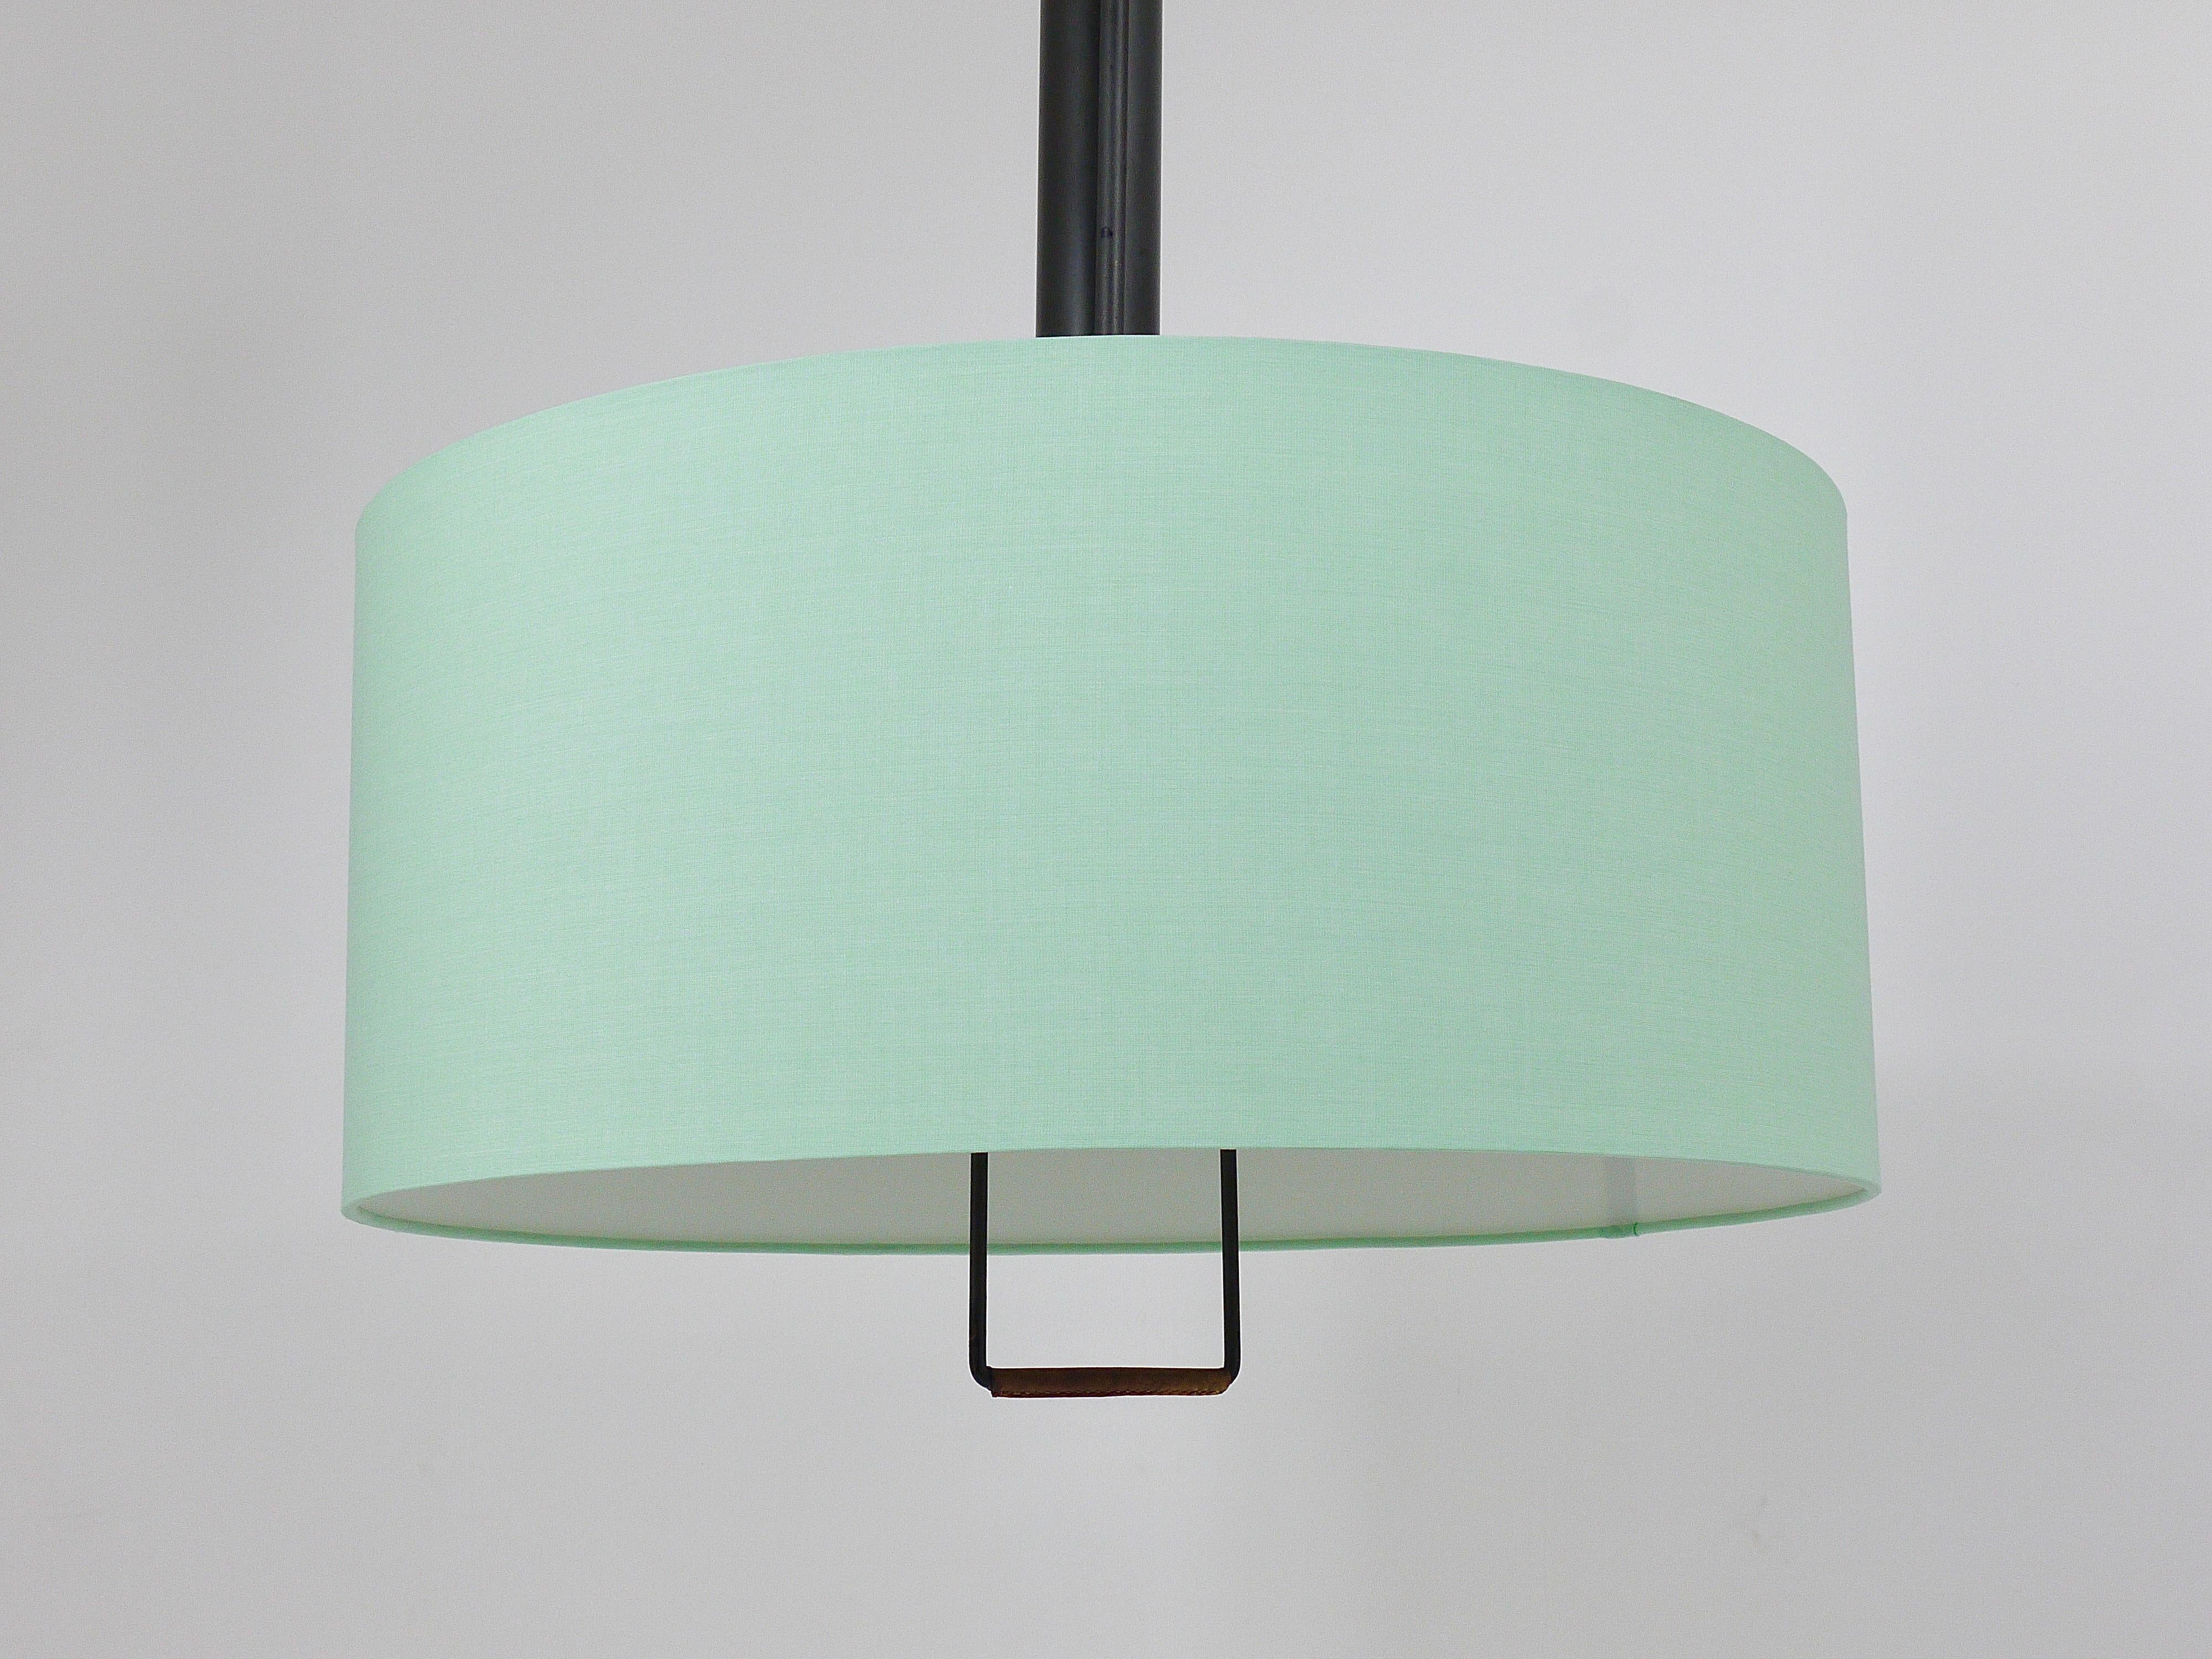 20th Century A Kalmar Midcentury Height-Adjustable Counterweight Pendant Lamp, Austria, 1950s For Sale